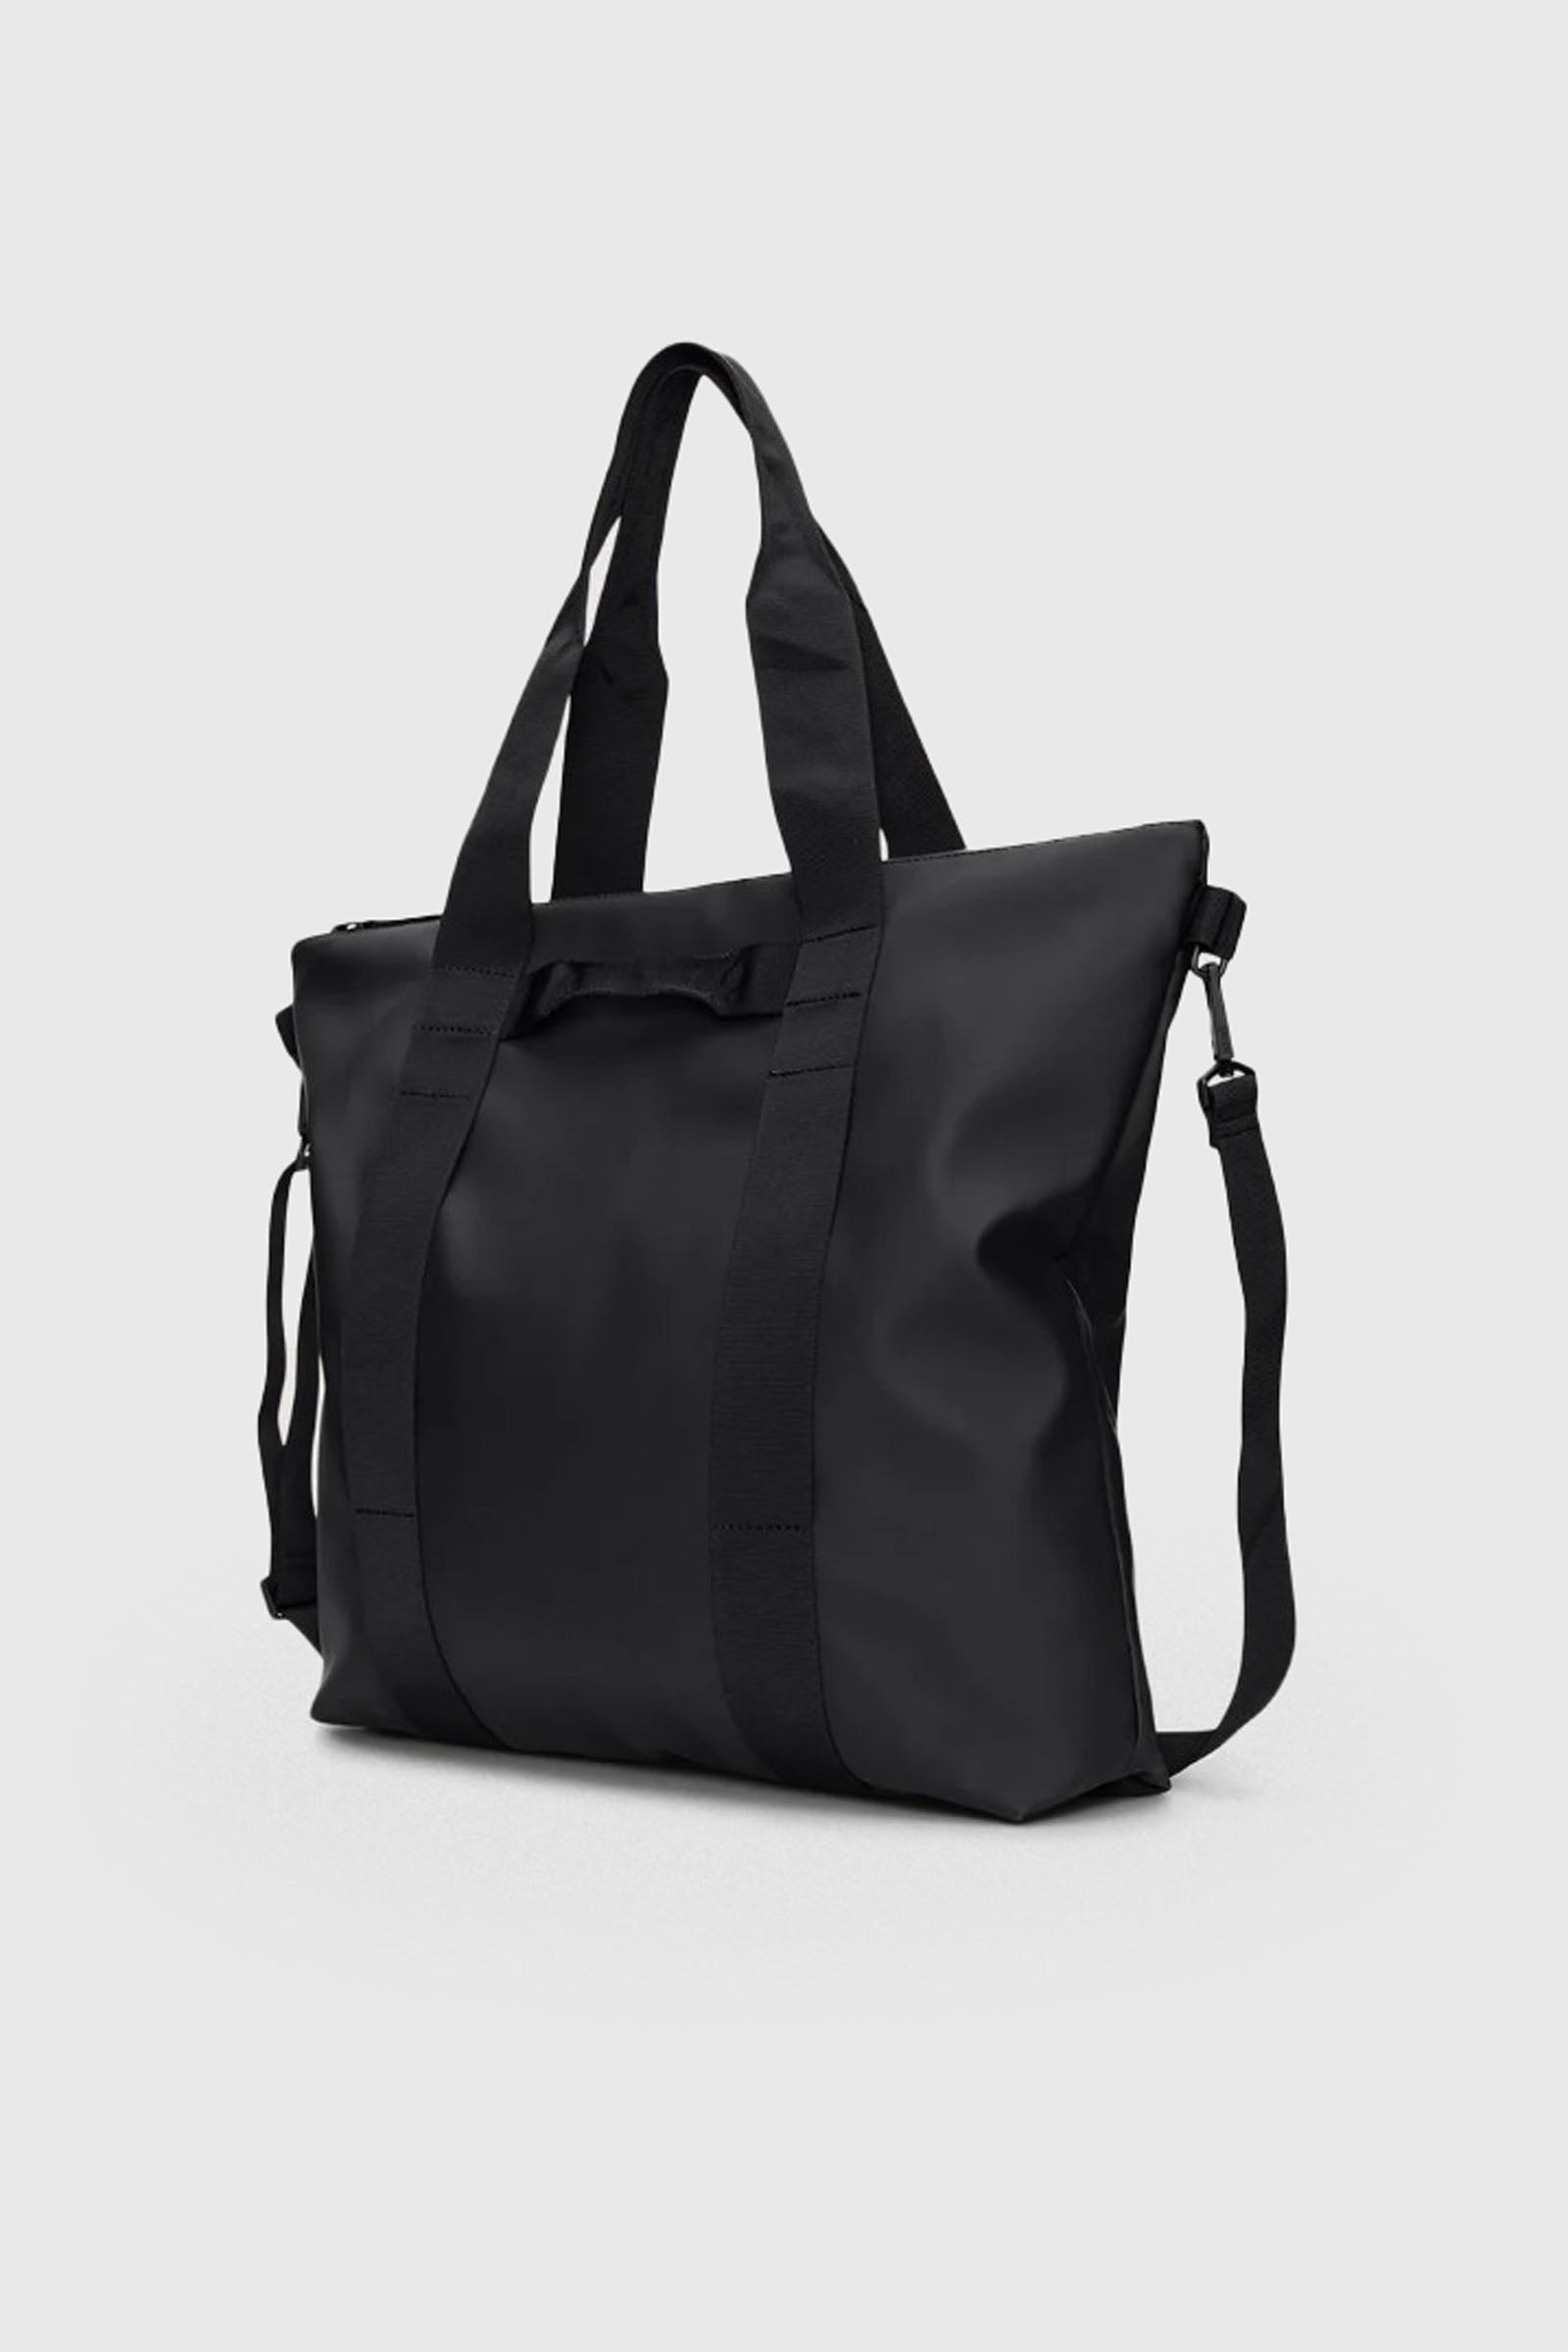 Rains Synthetic Black Tote Bag - 4